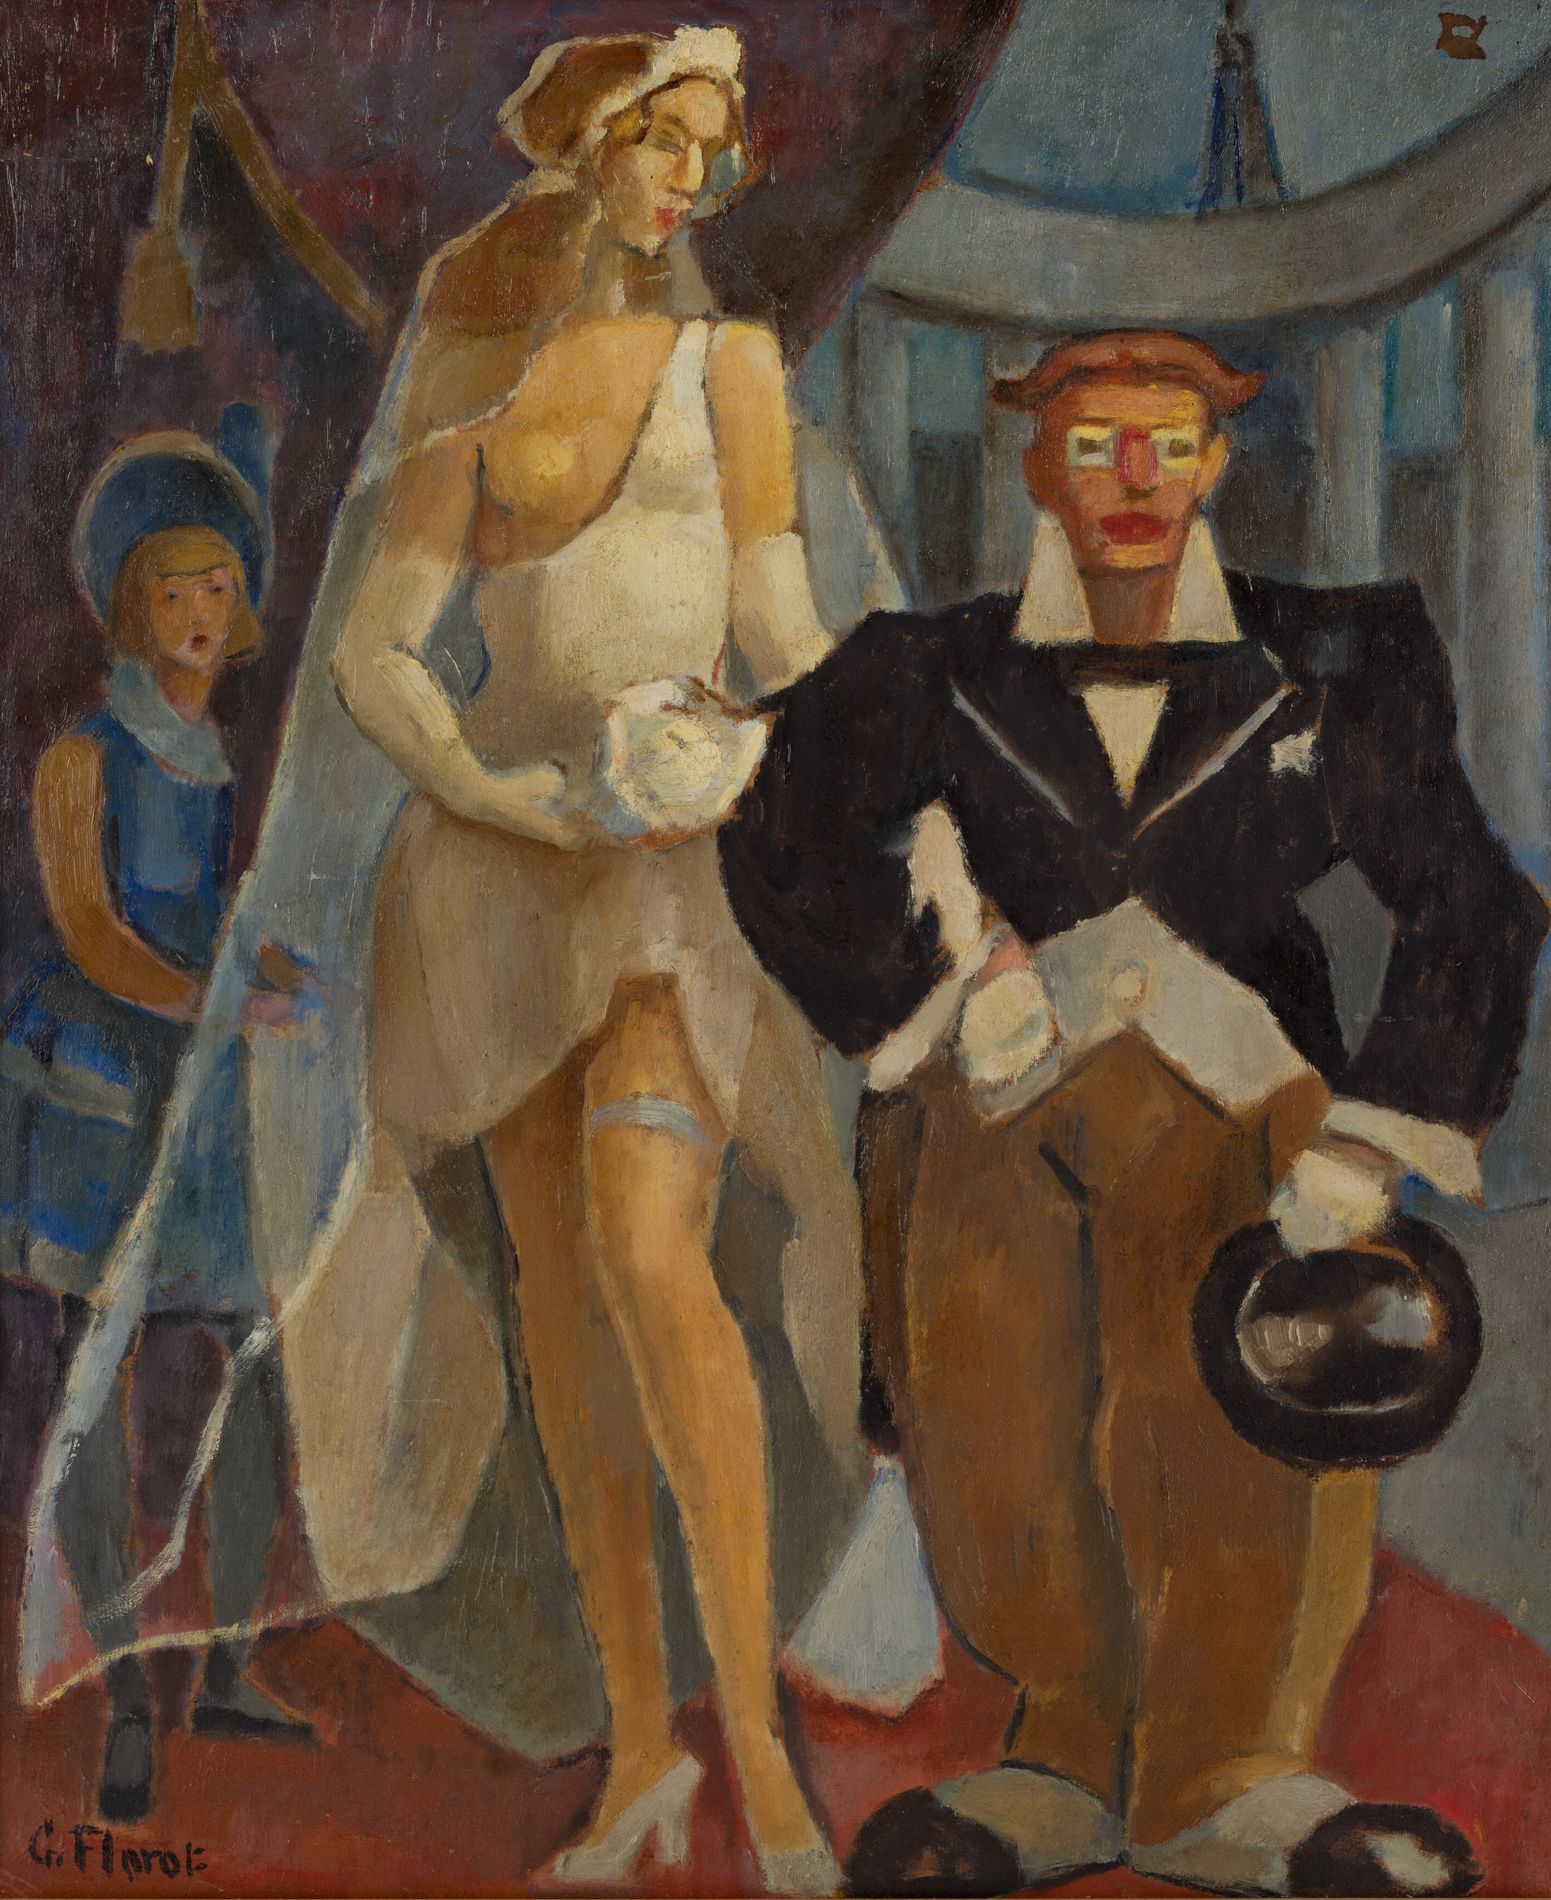 Null 古斯塔夫-福洛特 (1885-1965)
舞会 
板面油画，左下角有签名。 
尺寸：54 x 44 cm